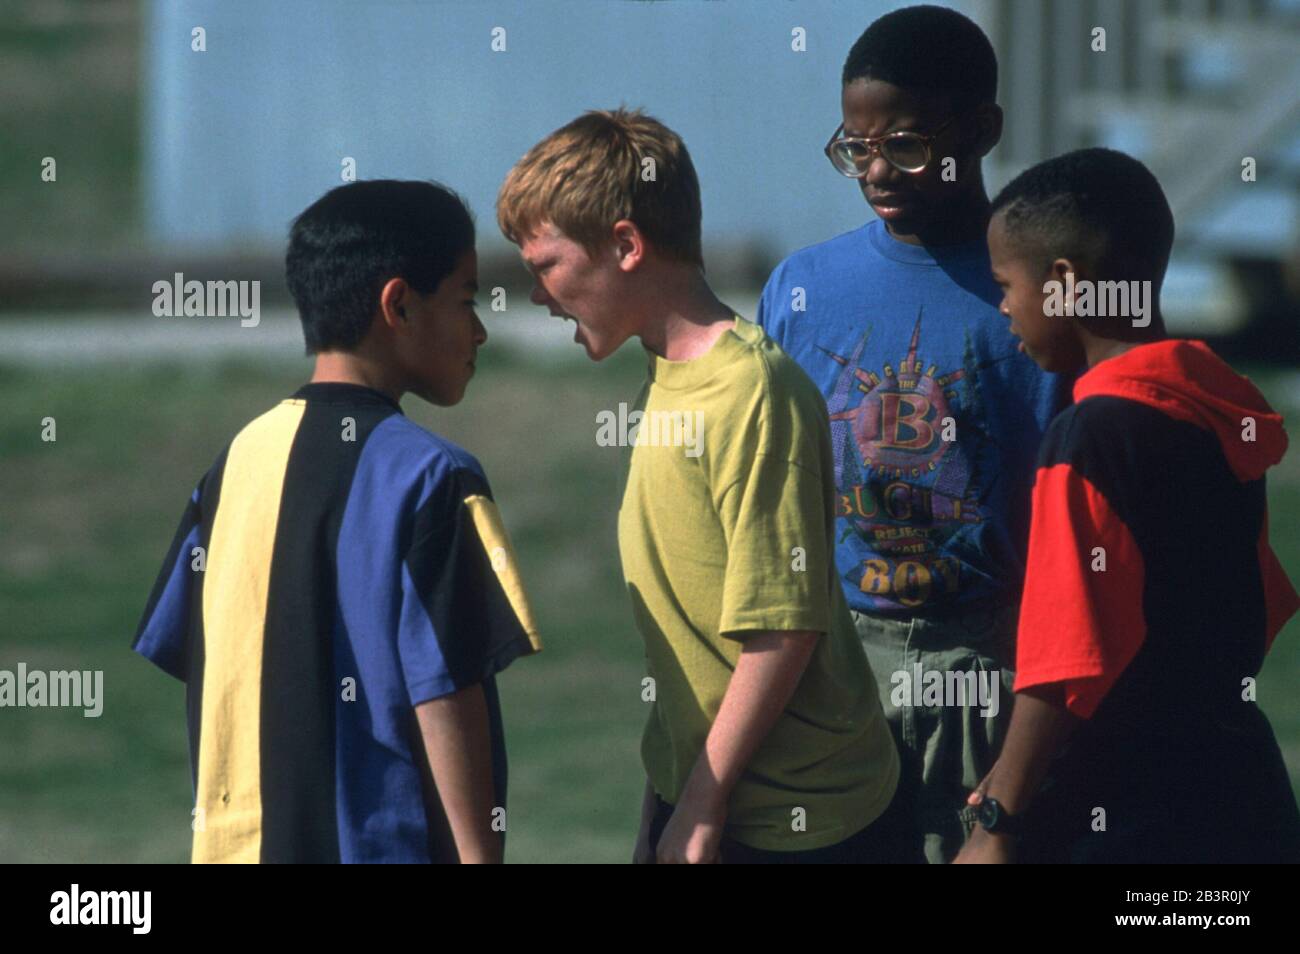 Austin Texas USA, circa 1995: Young boys arguing on school playground. ©Bob Daemmrich Stock Photo